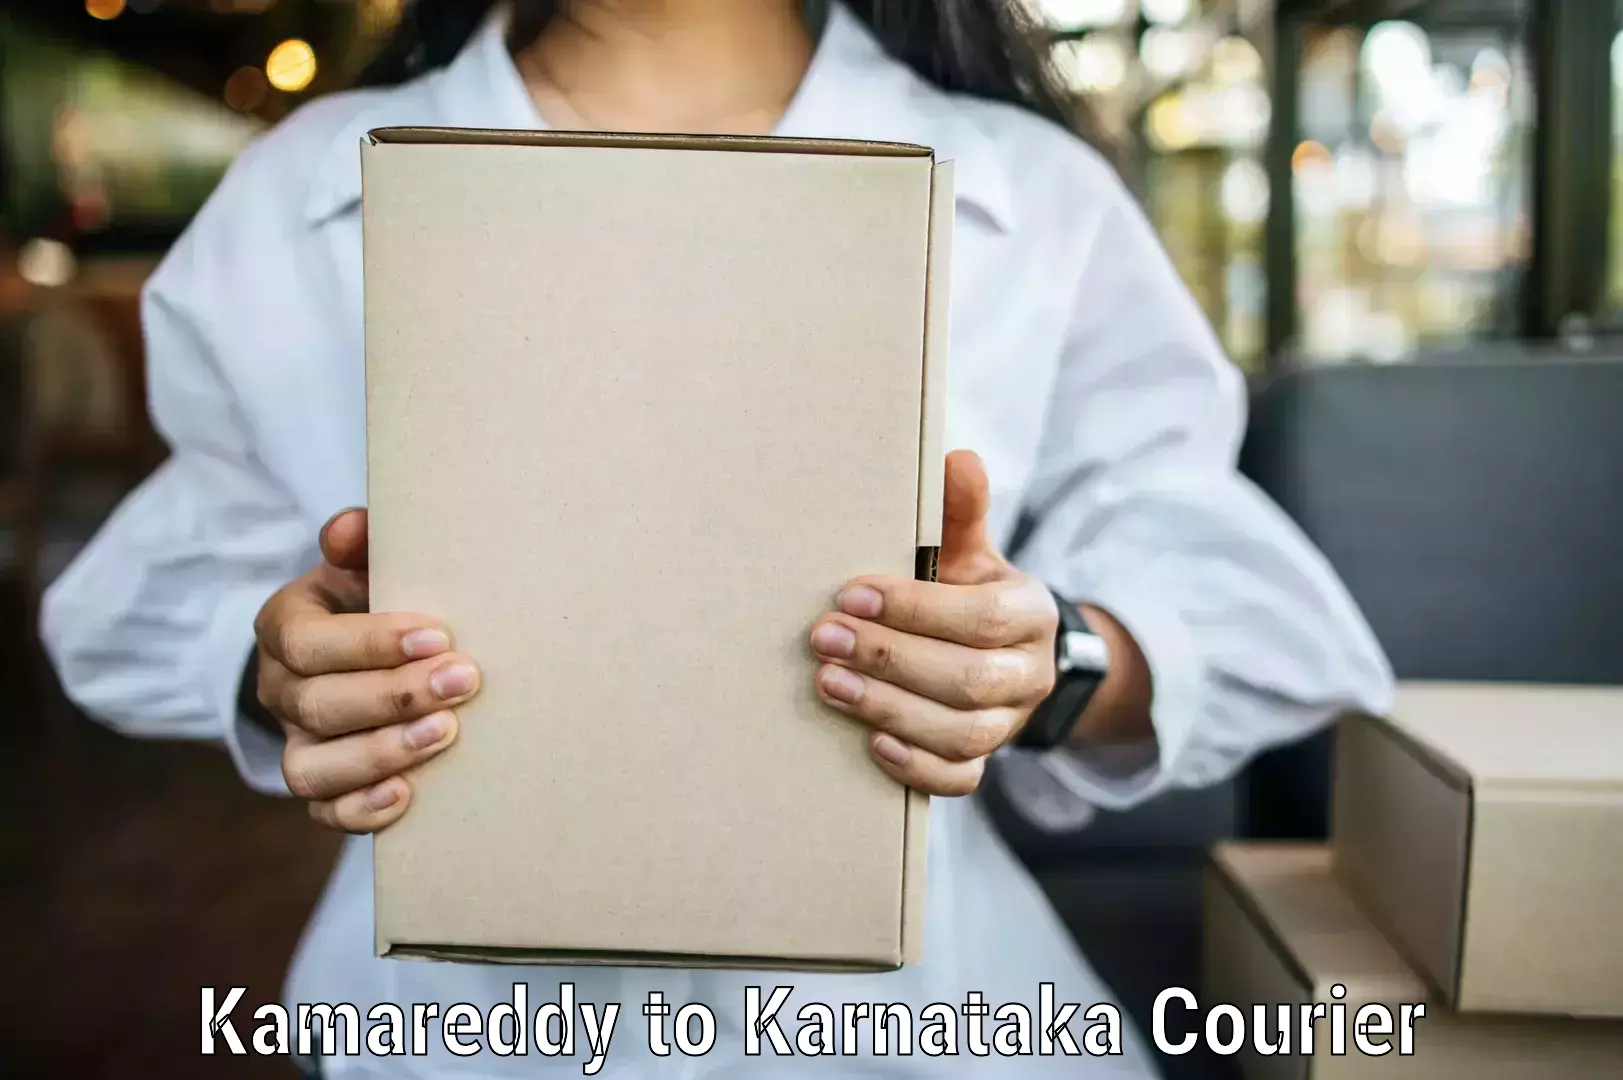 Courier service comparison Kamareddy to Yellapur